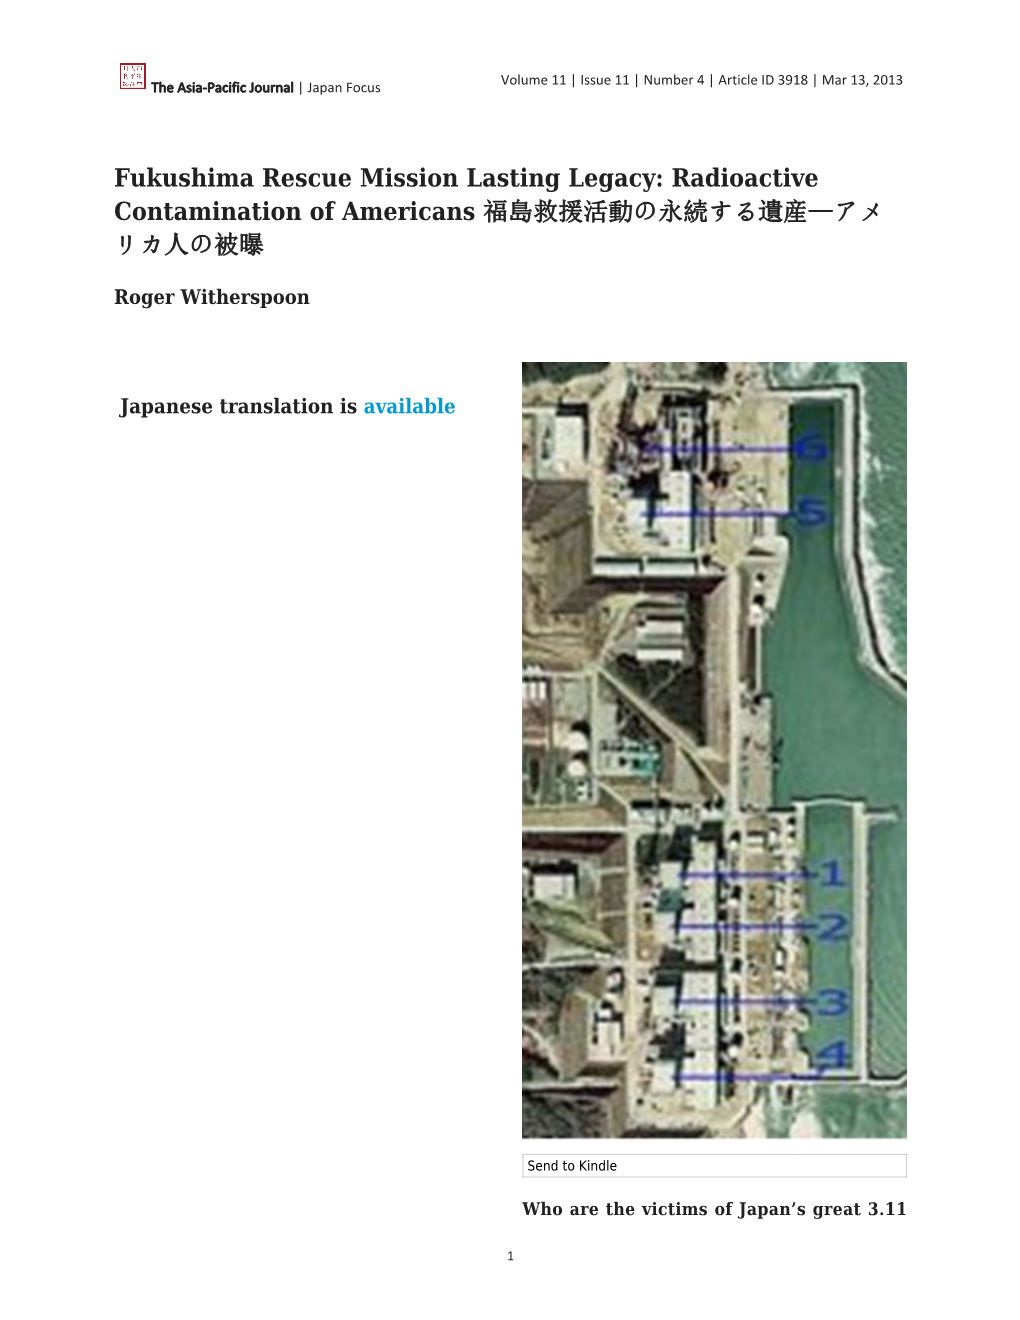 Fukushima Rescue Mission Lasting Legacy: Radioactive Contamination of Americans 福島救援活動の永続する遺産—アメ リカ人の被曝